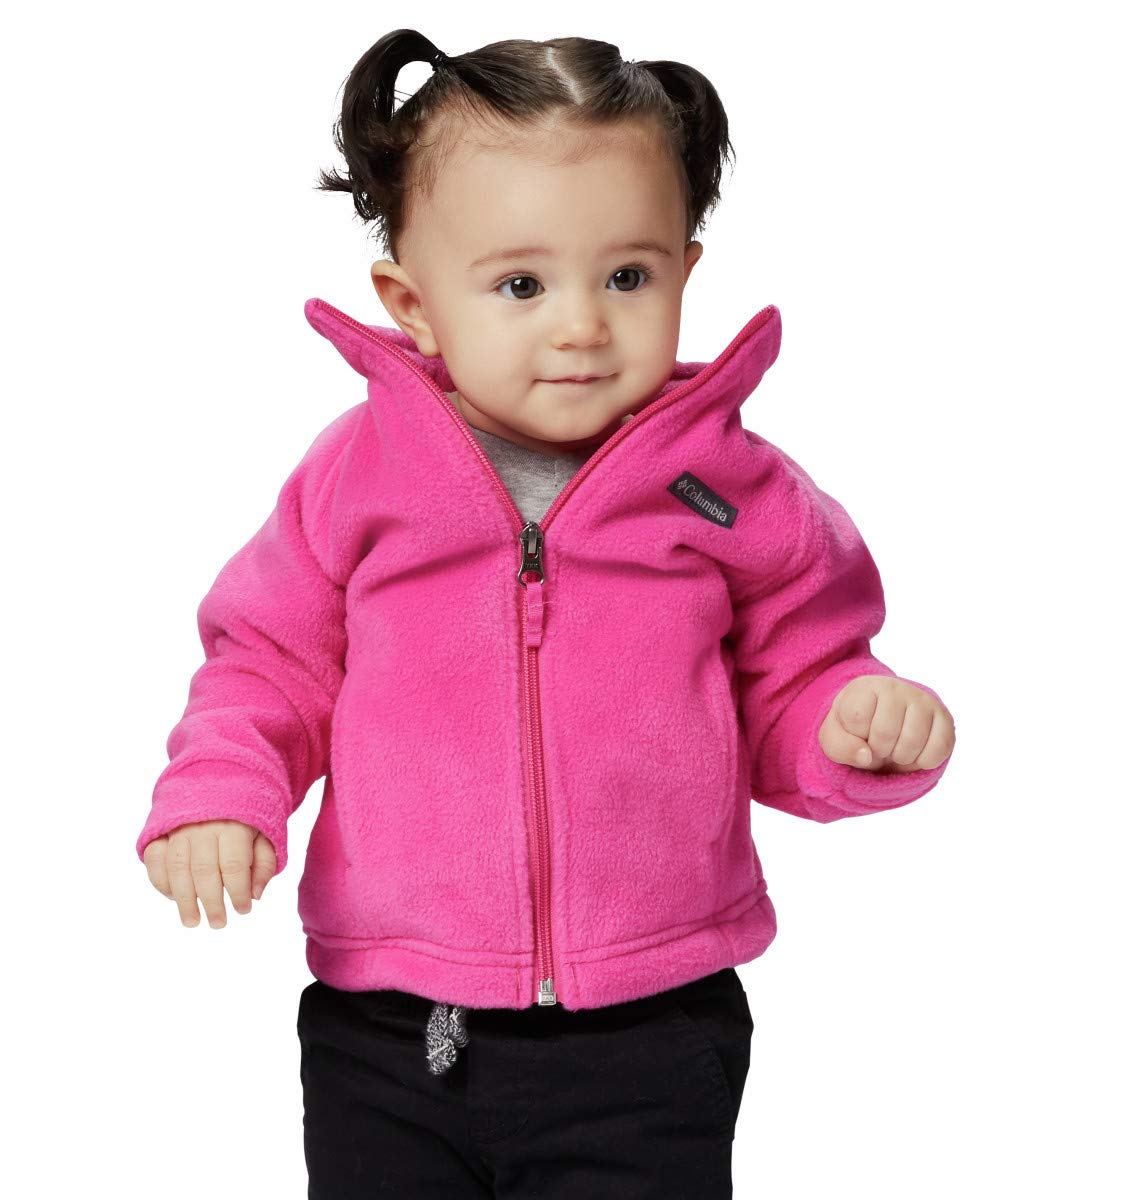 Columbia Girls Benton Springs Fleece Jacket (Pink Ice) $15.98 + Free Shipping w/ Prime or on $35+